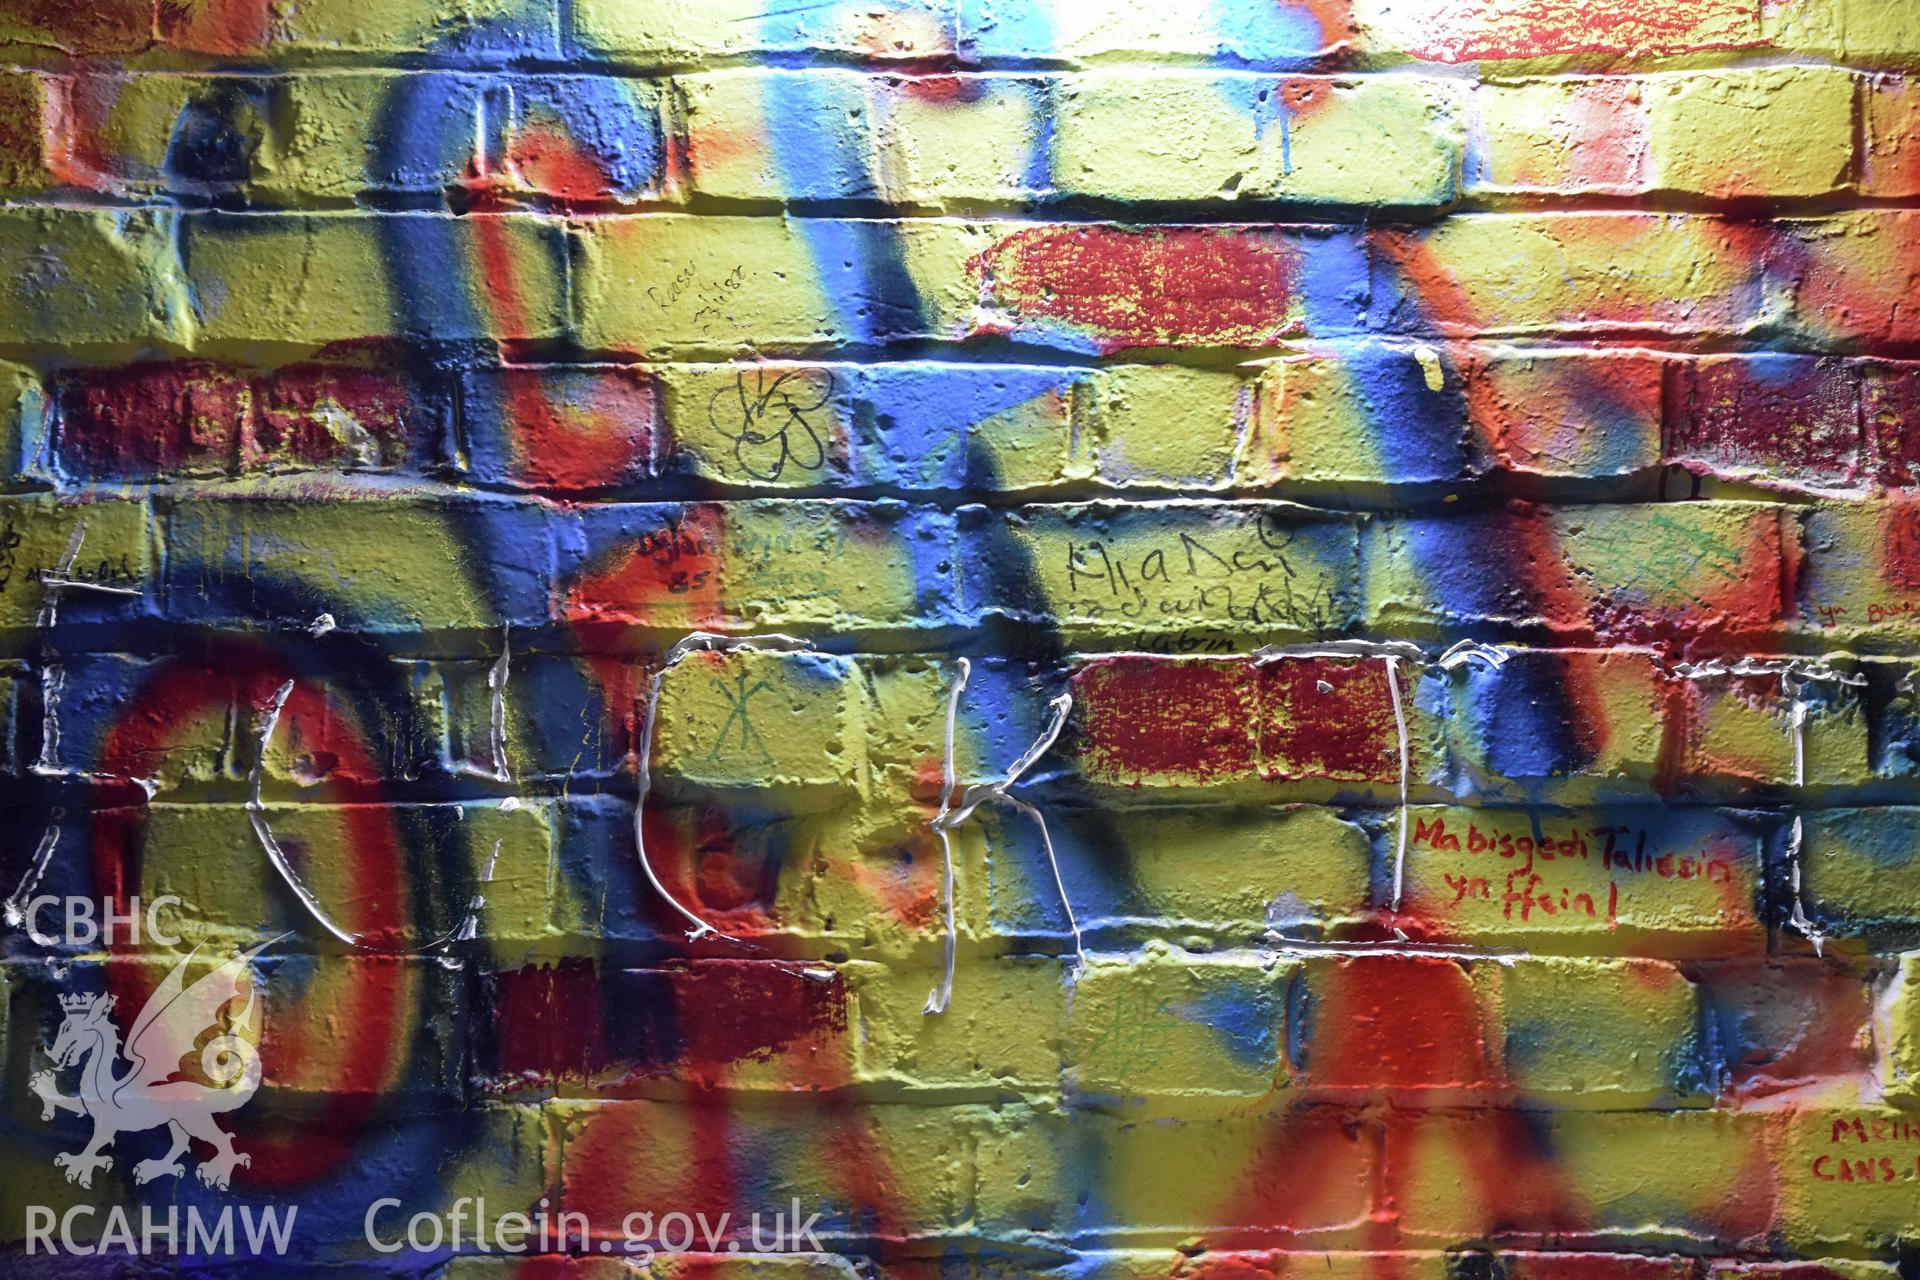 Basement bar 'y bar coffi' detail of graffitti.